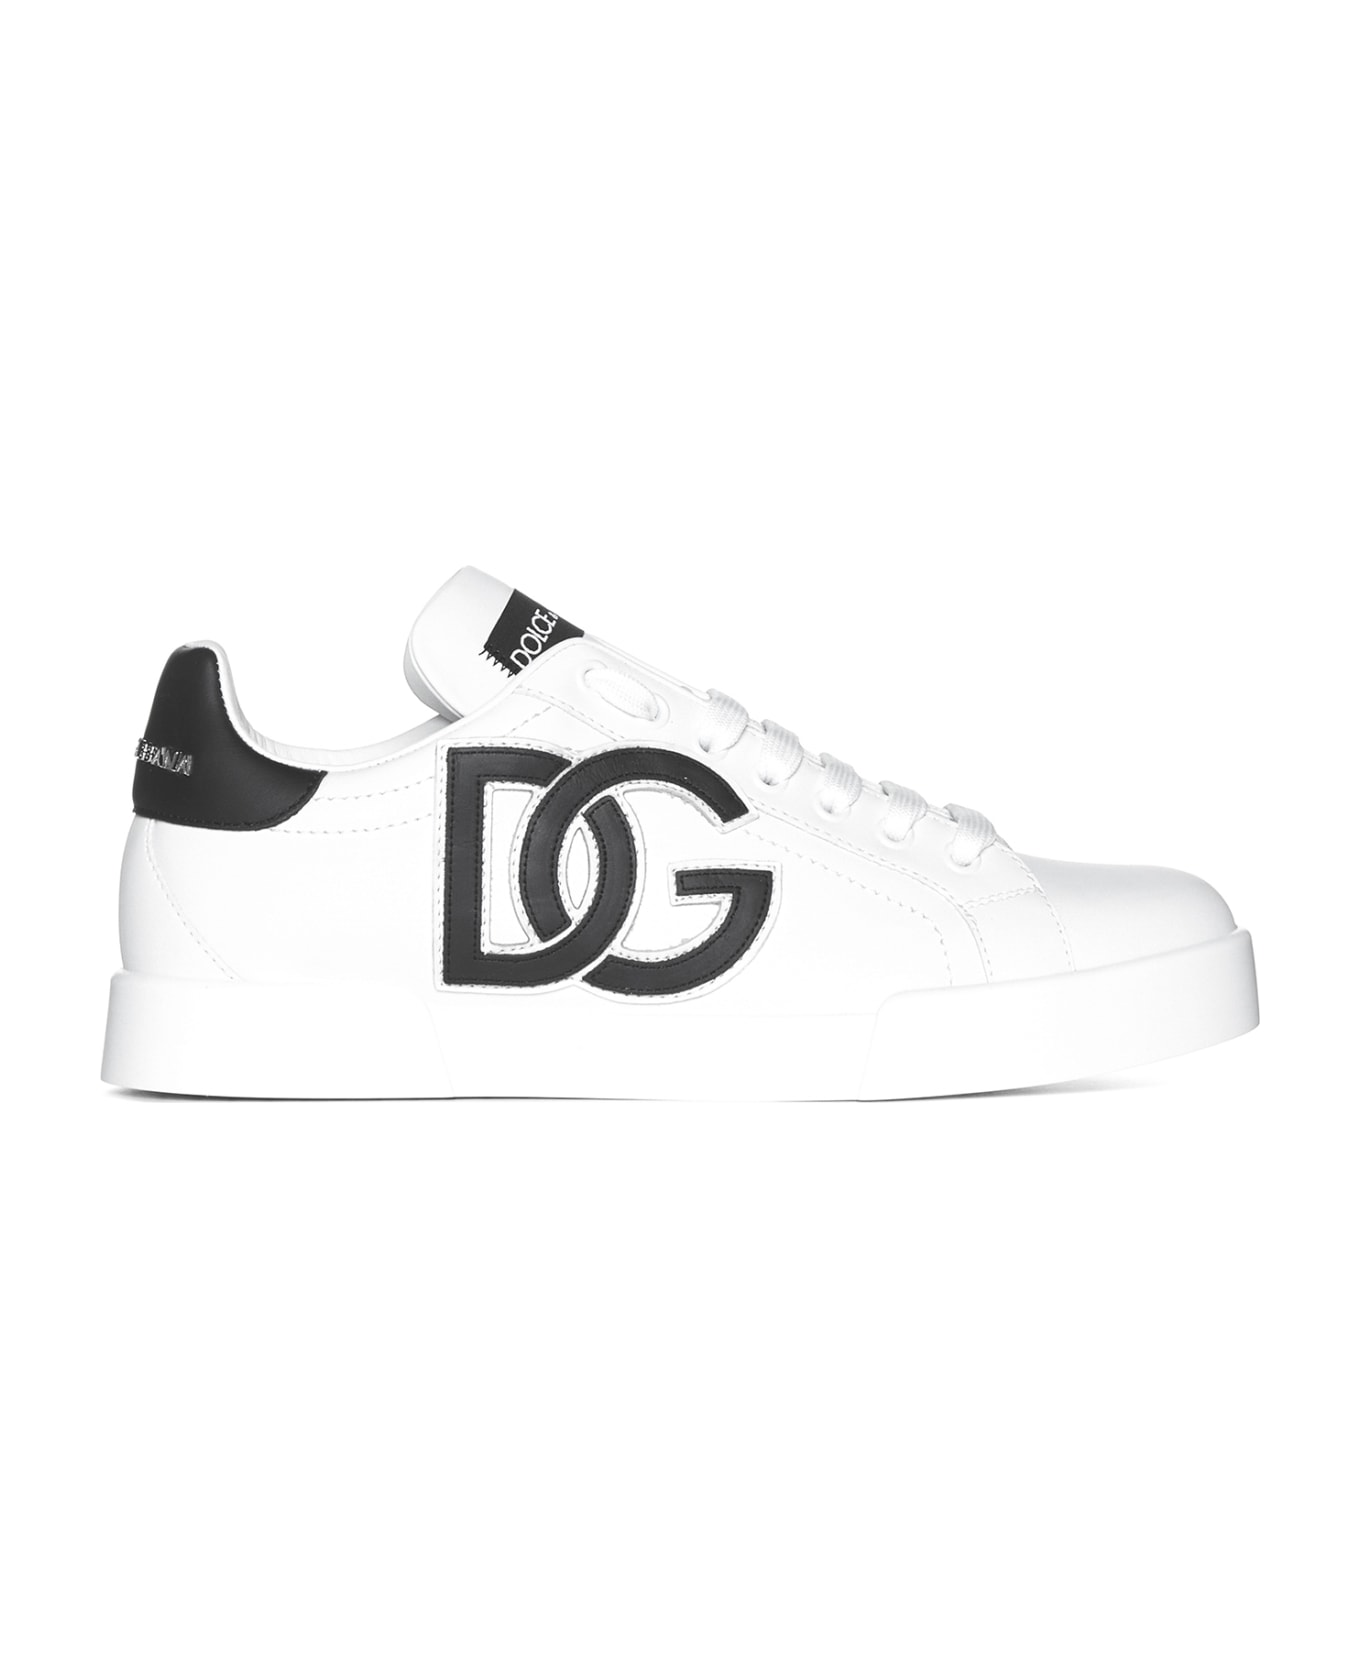 Dolce & Gabbana Portofino Sneakers - Bianco/nero スニーカー